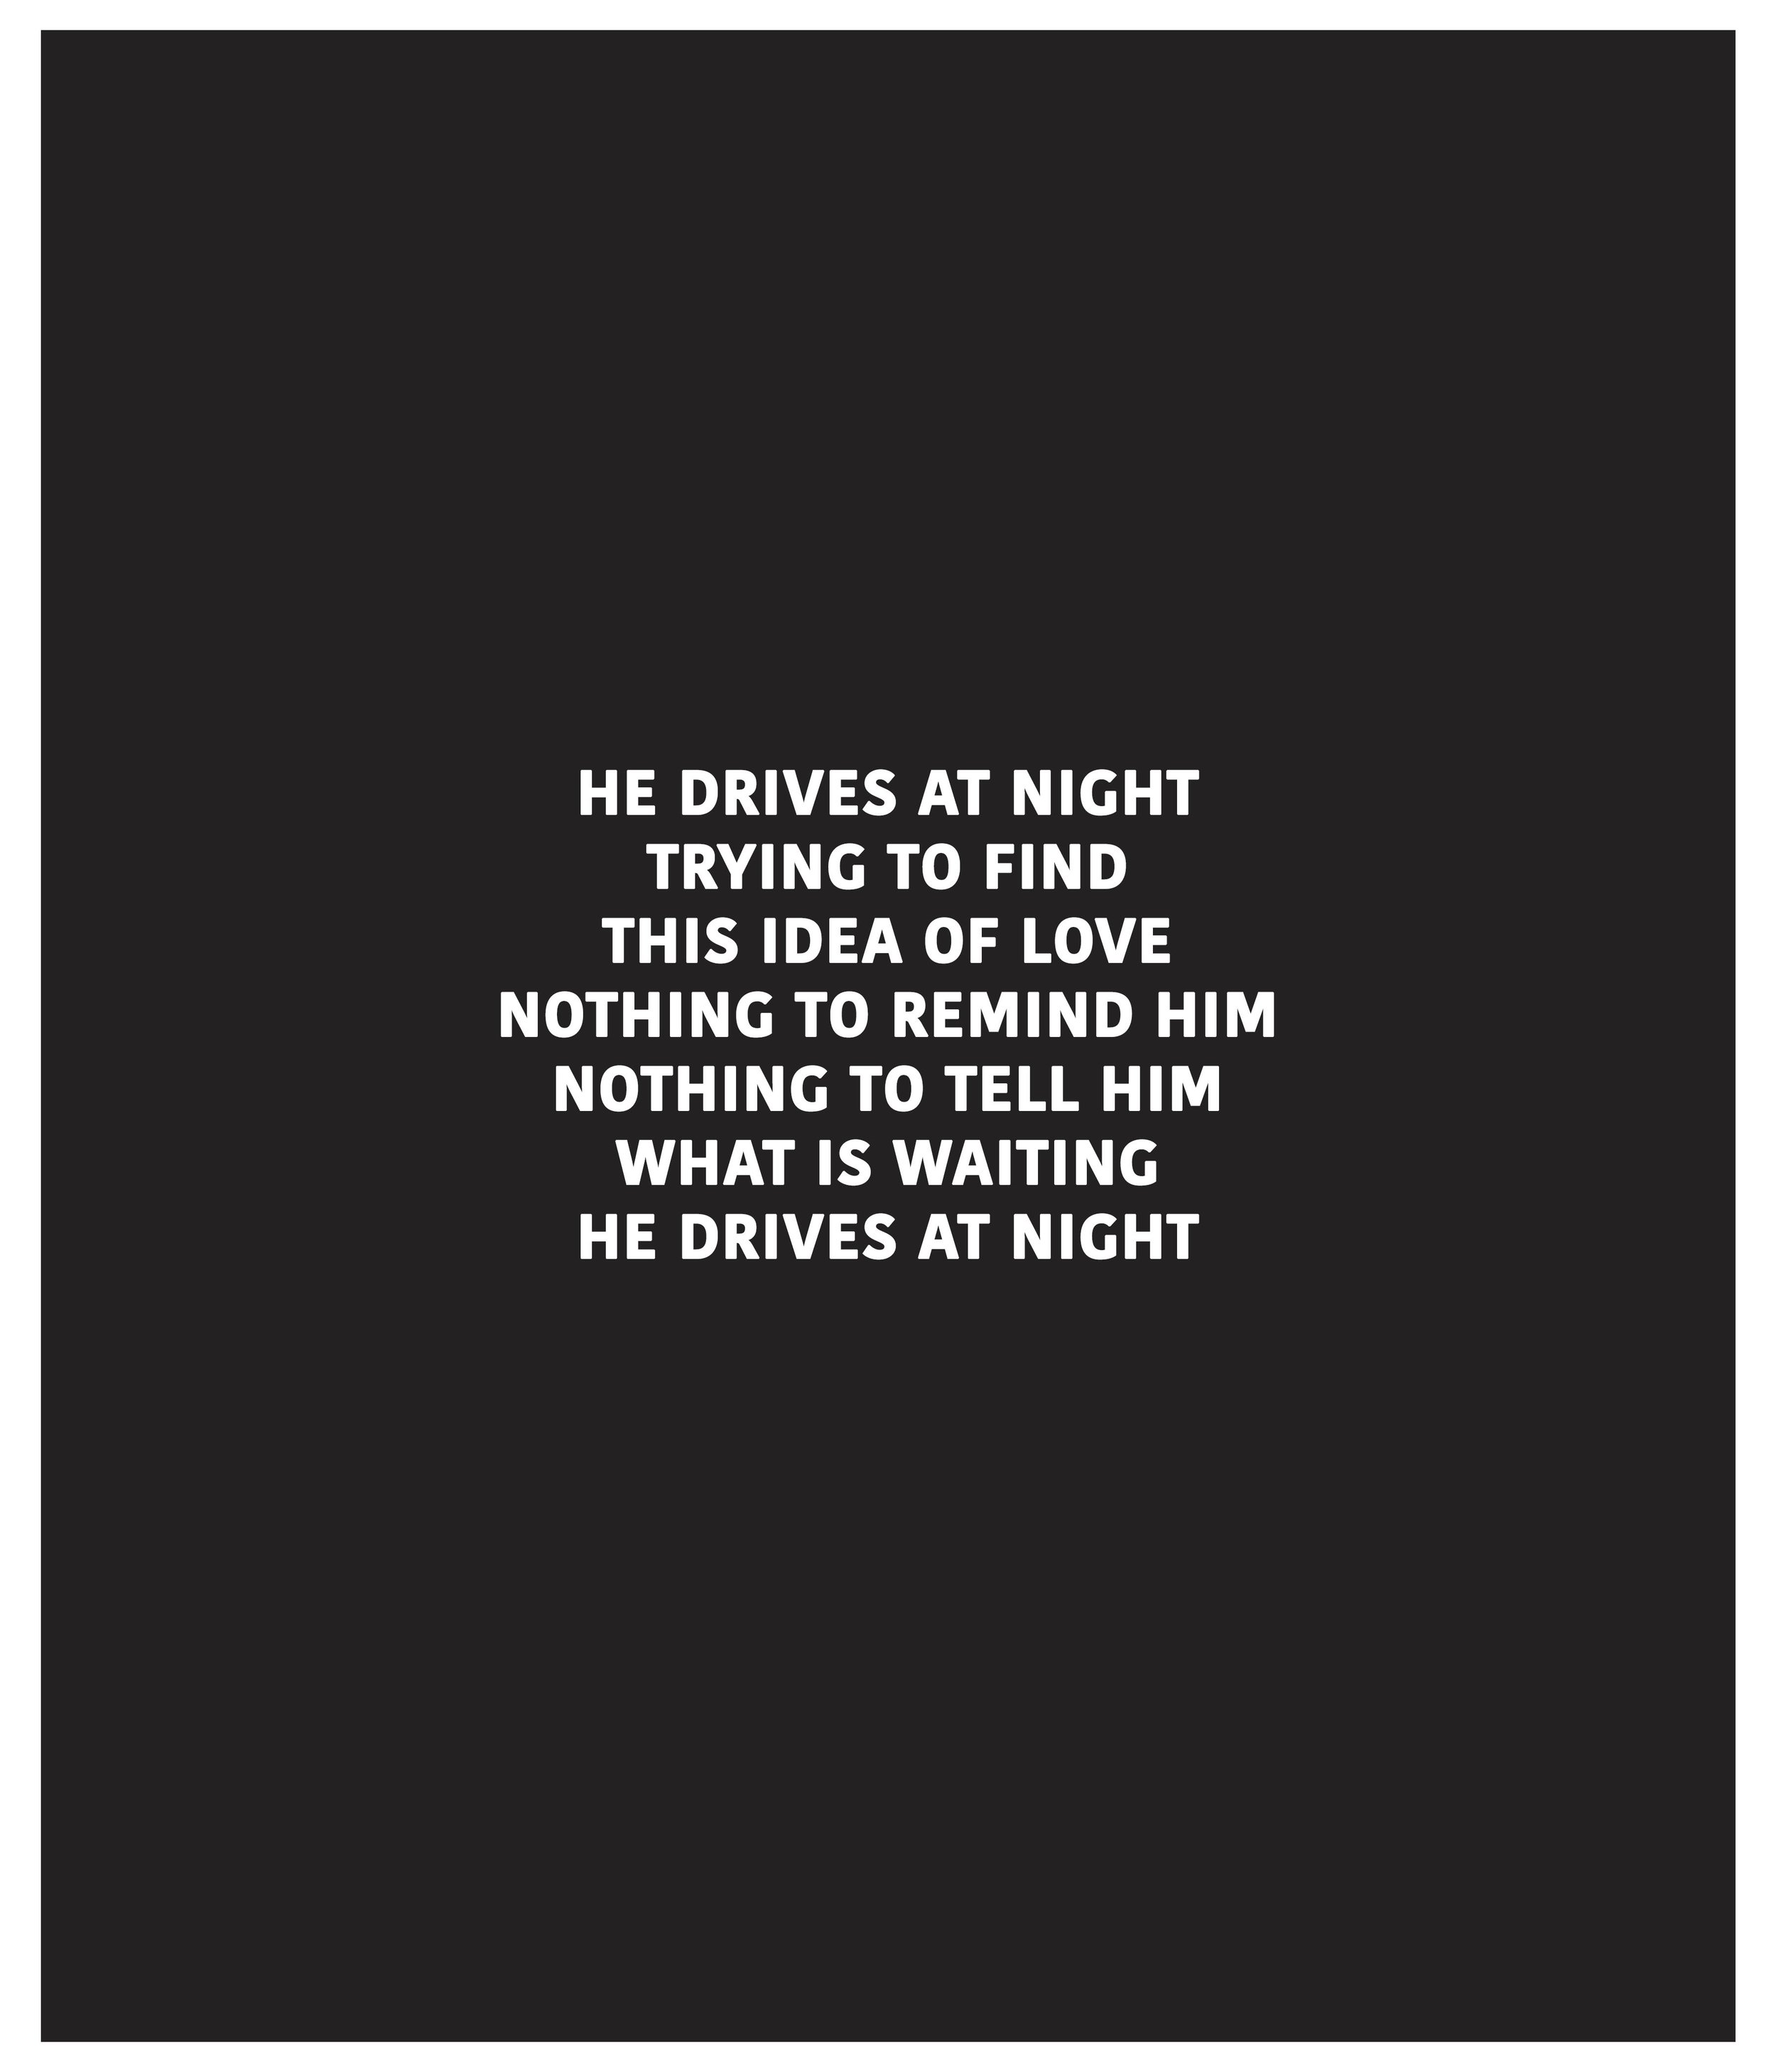 HE DRIVES AT NIGHT